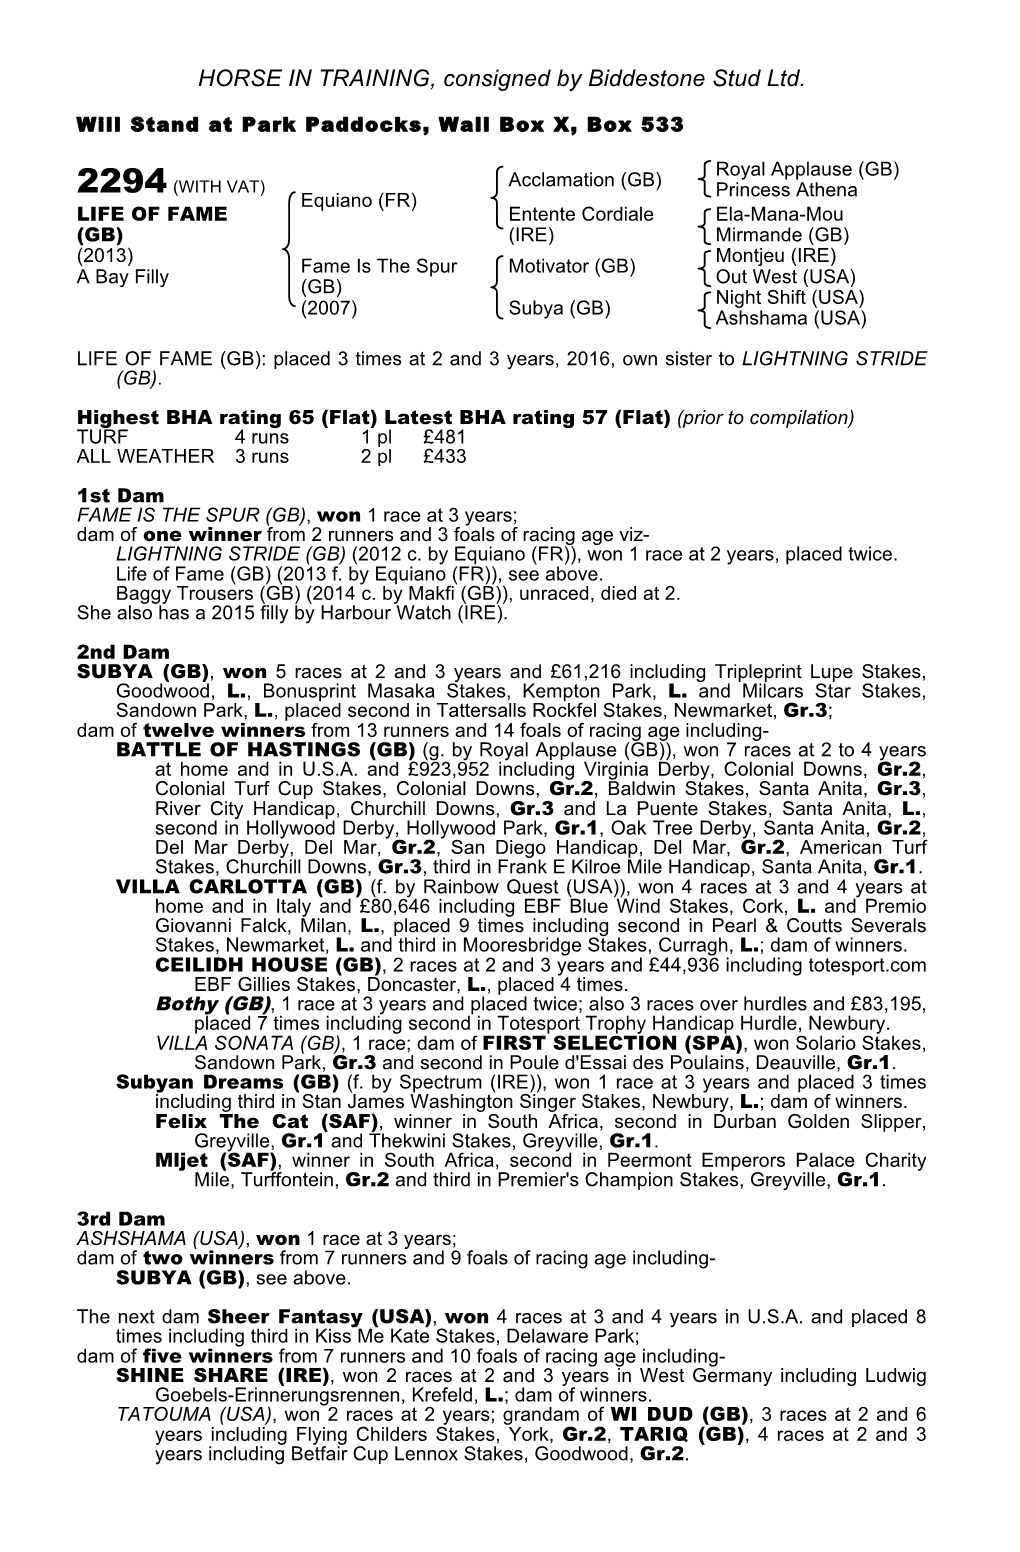 HORSE in TRAINING, Consigned by Biddestone Stud Ltd